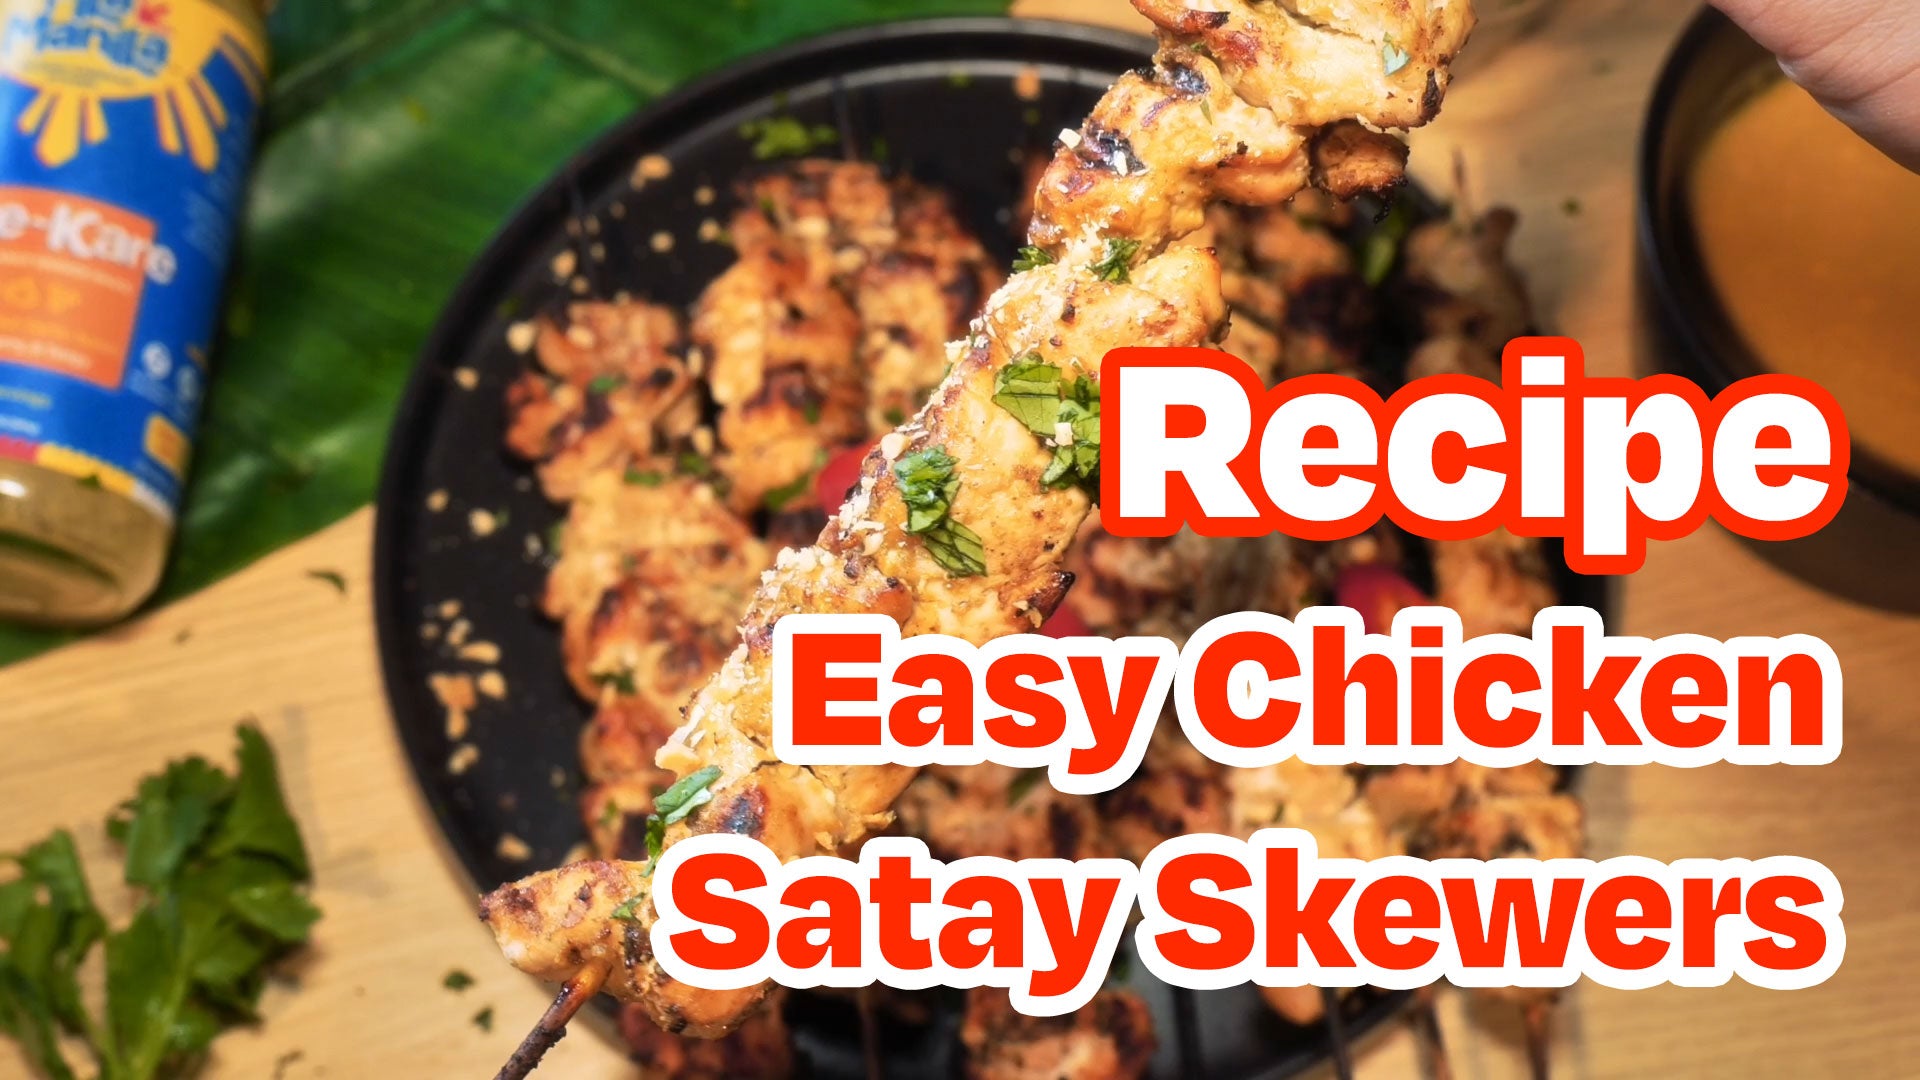 Recipe: Easy Chicken Satay Skewers by Fila Manila